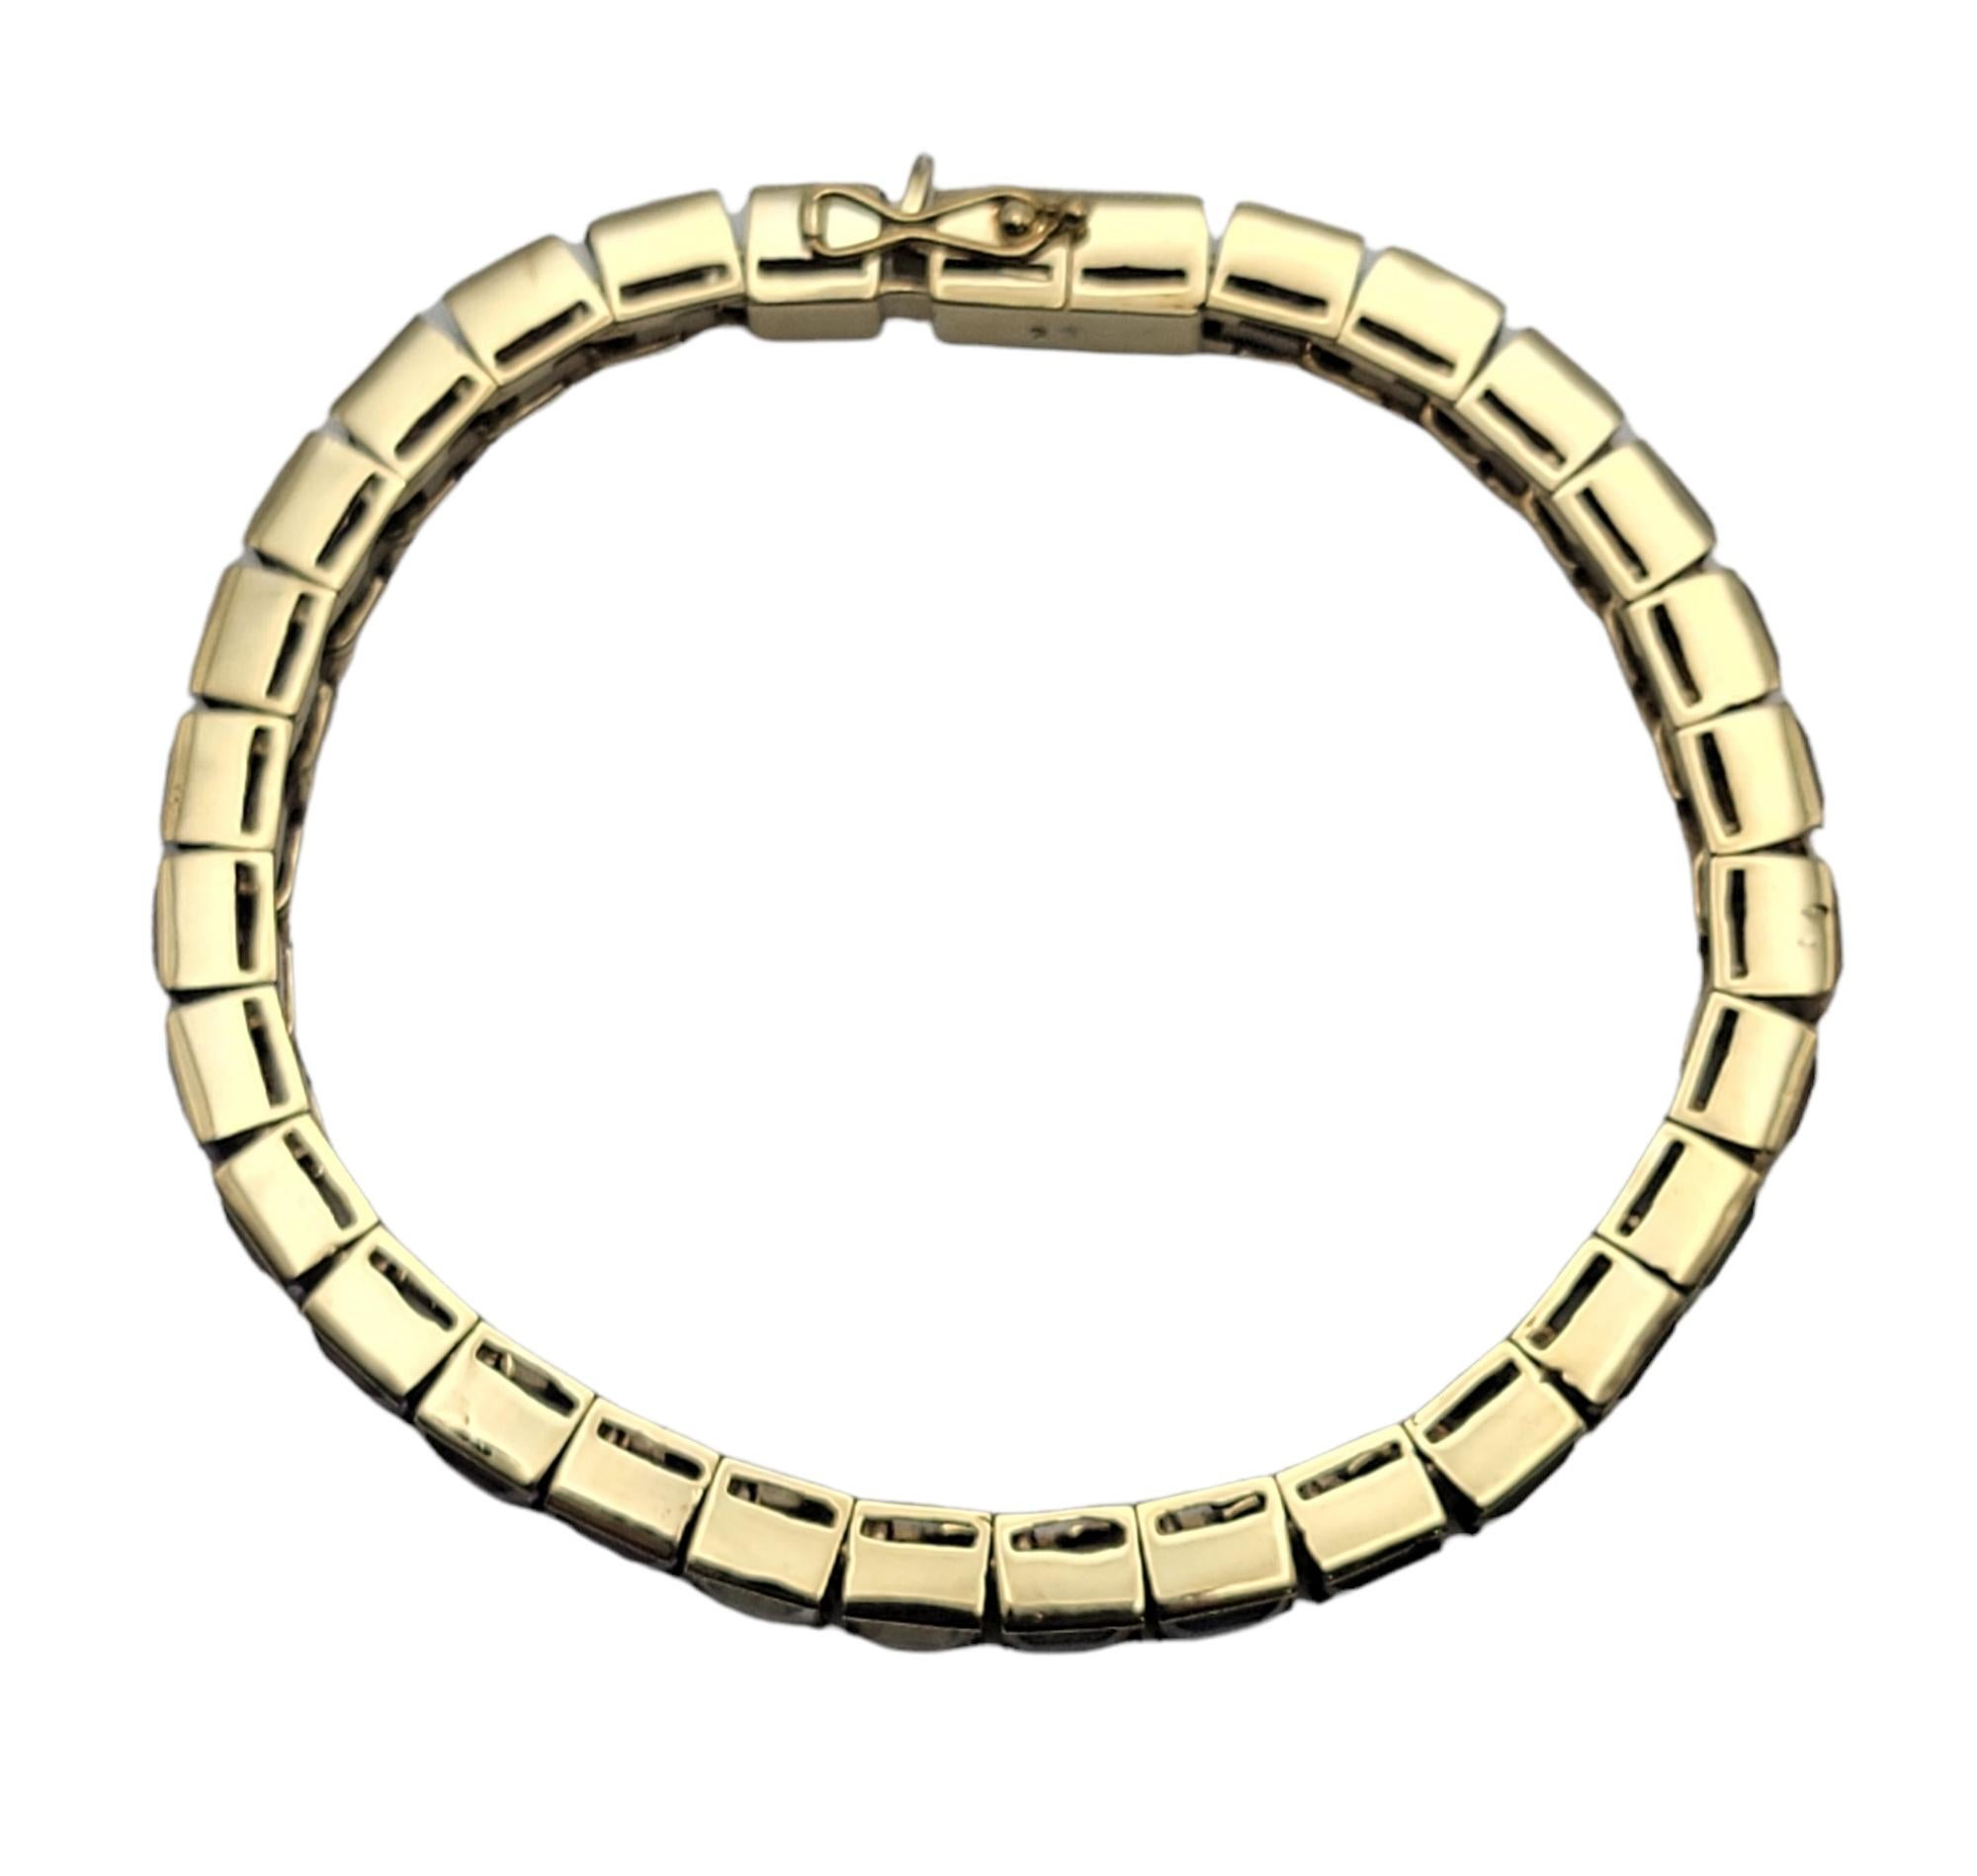 19.55 Carats Total Rainbow Multi-Gemstone Link Bracelet in 14 Karat Yellow Gold 2